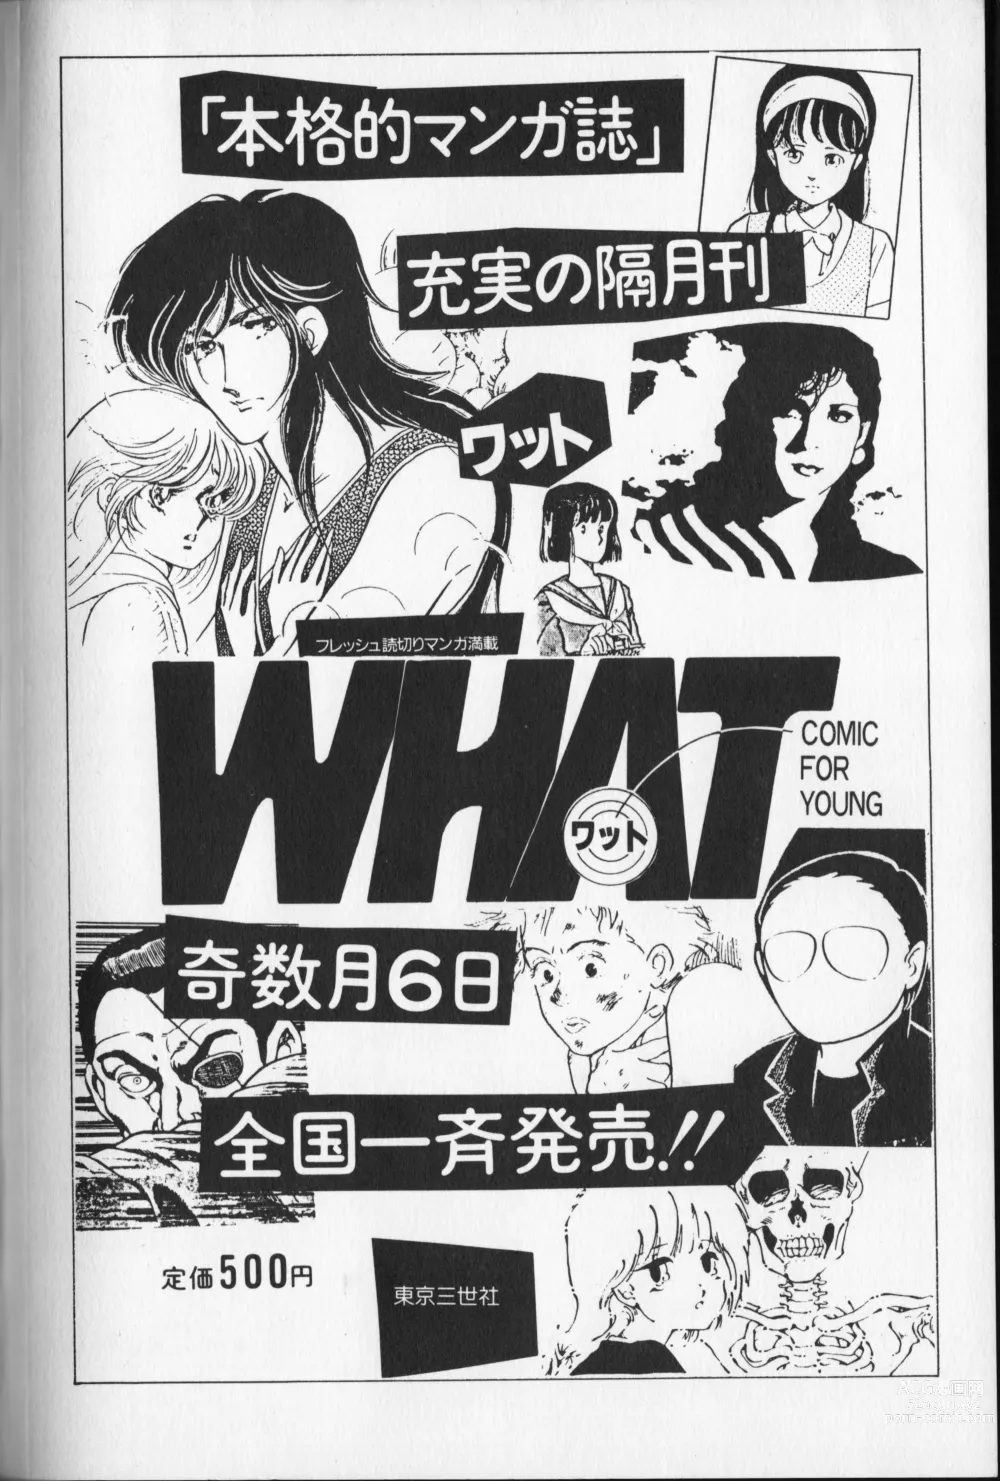 Page 168 of manga Pretty Executor